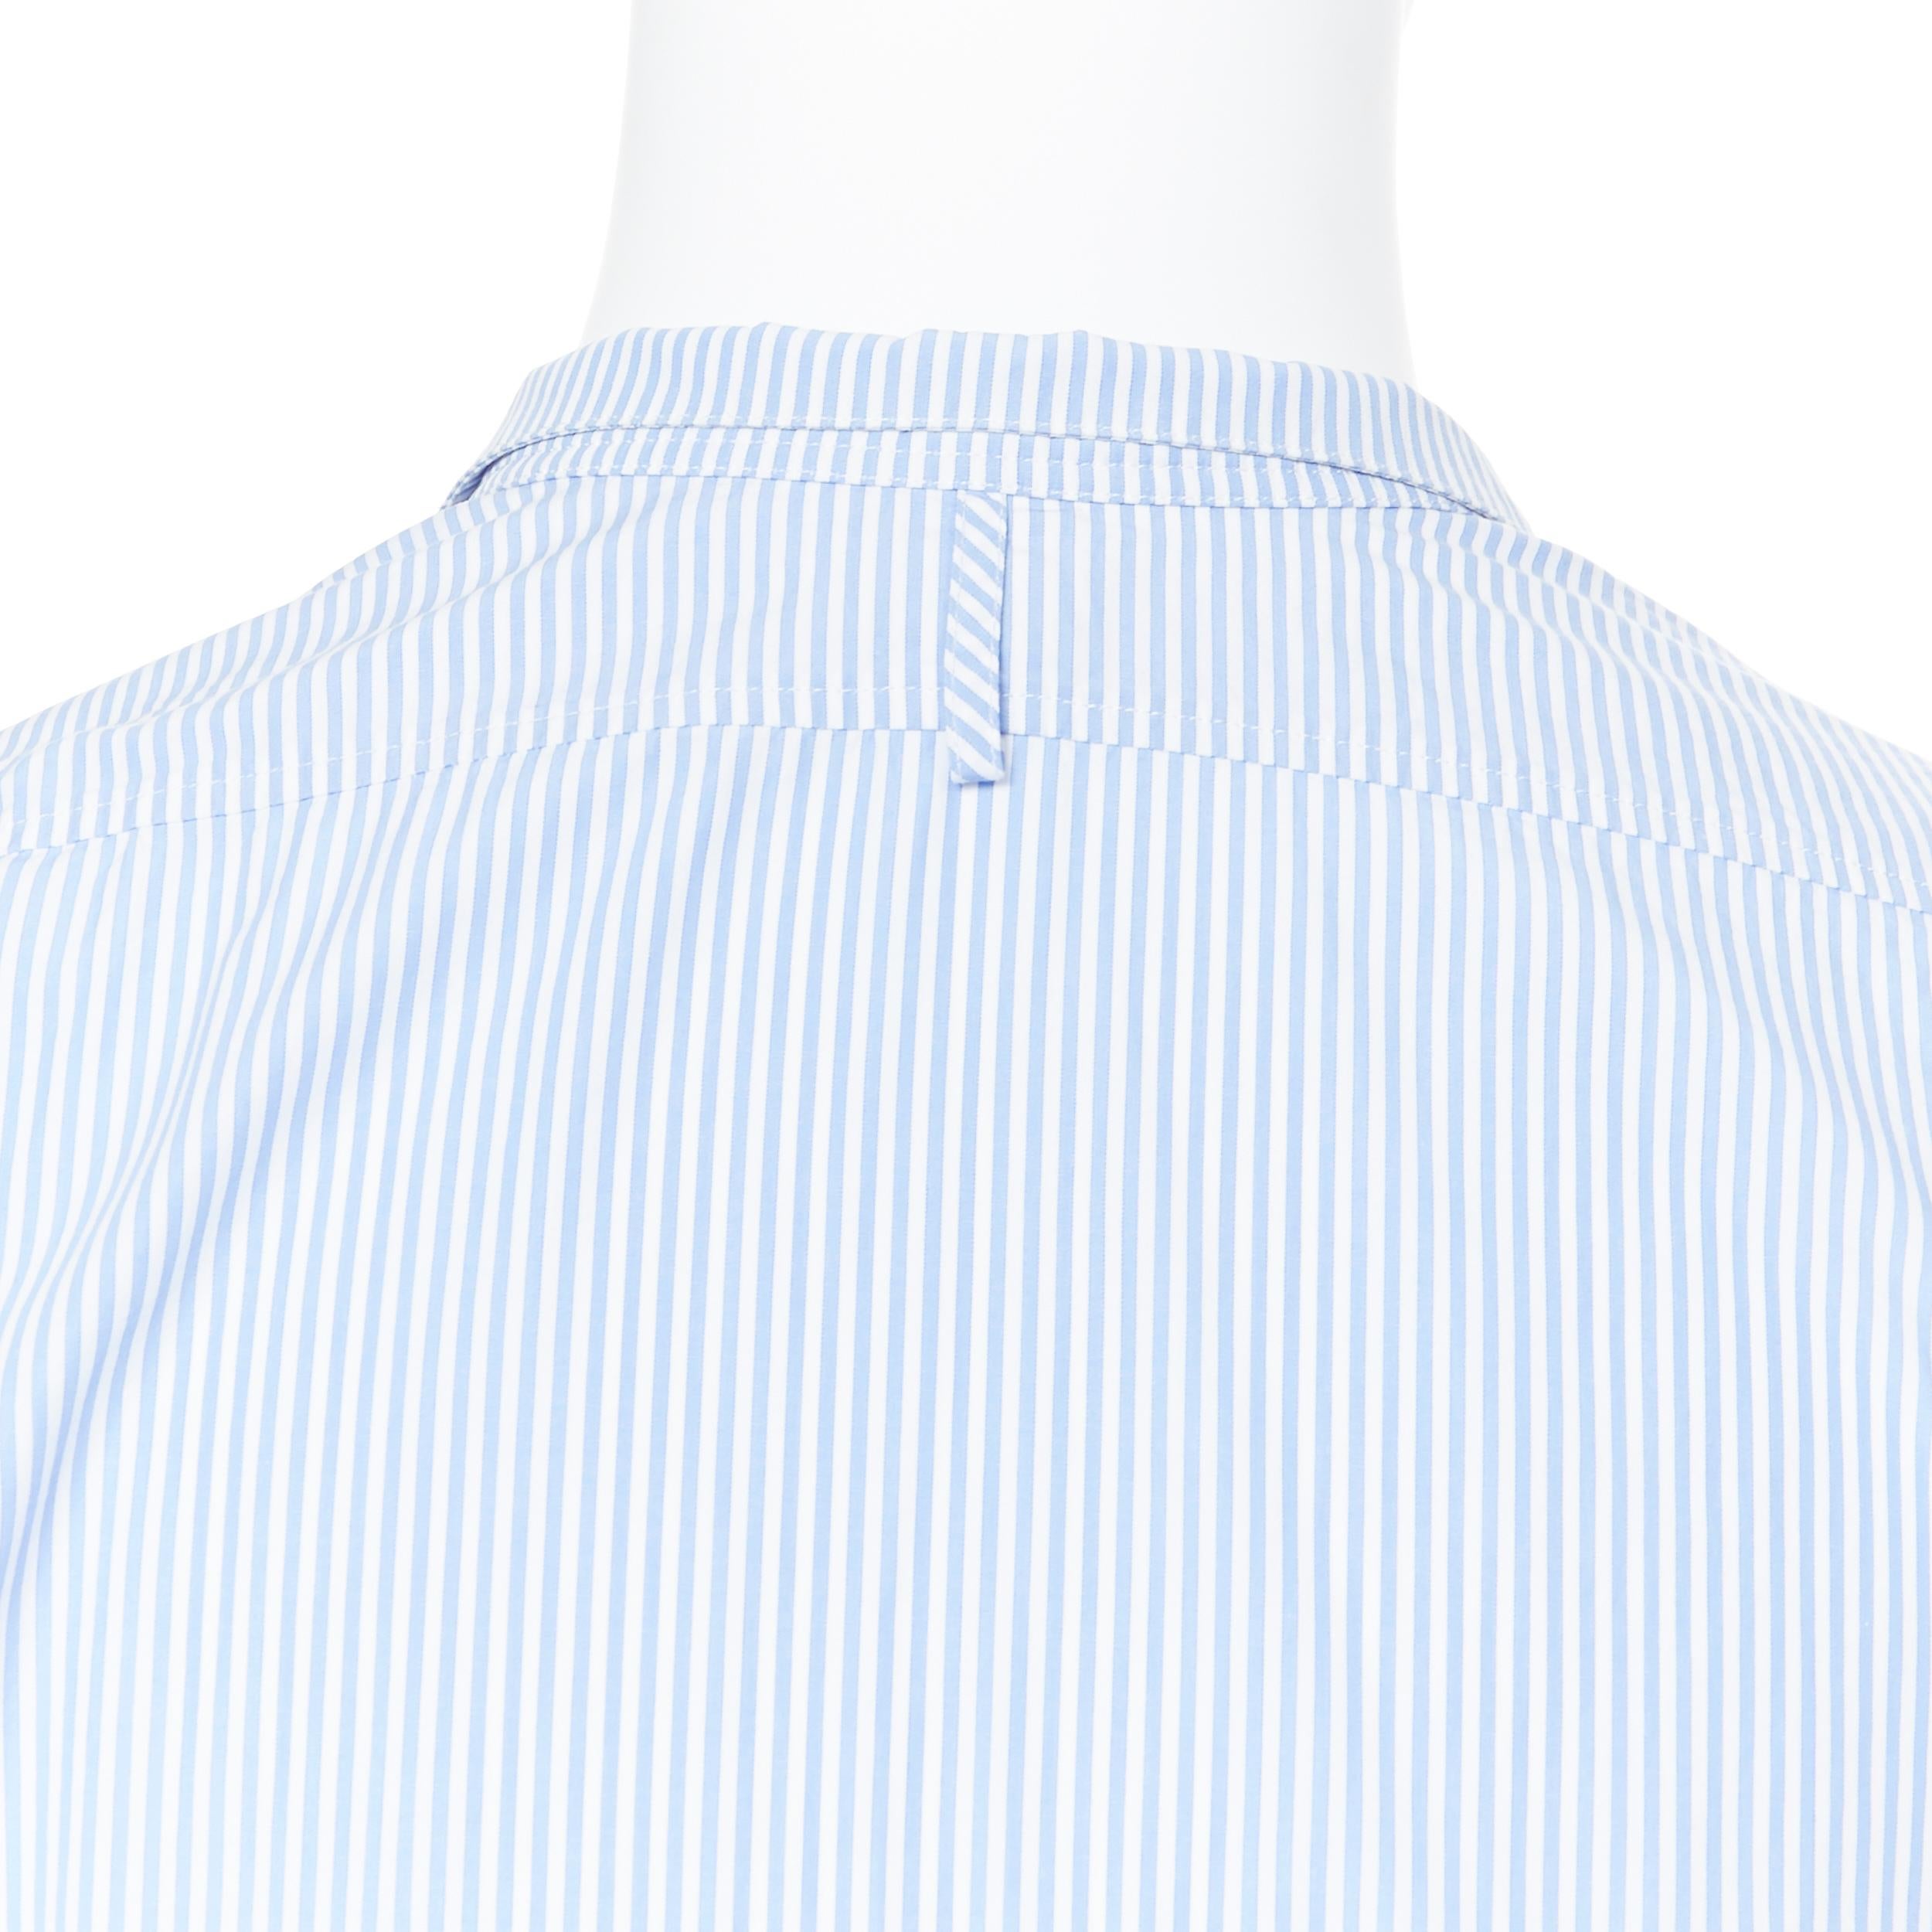 LOEWE JW ANDERSON 100% blue white striped cotton bib collar long line shirt S 2